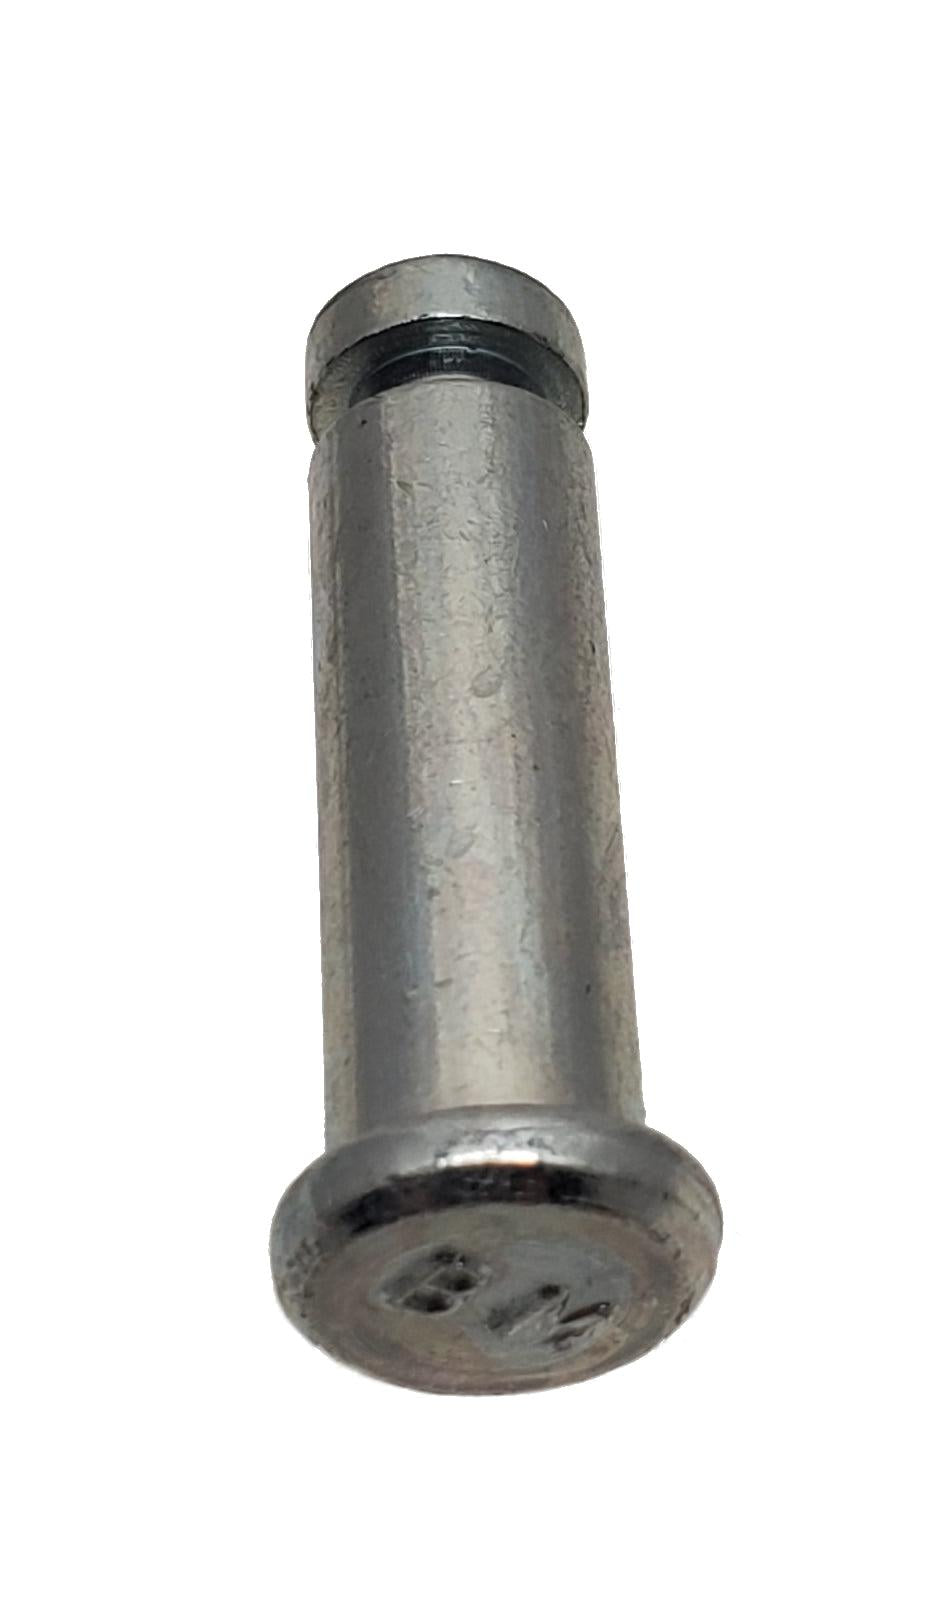 John Deere Original Equipment Pin #GX21042